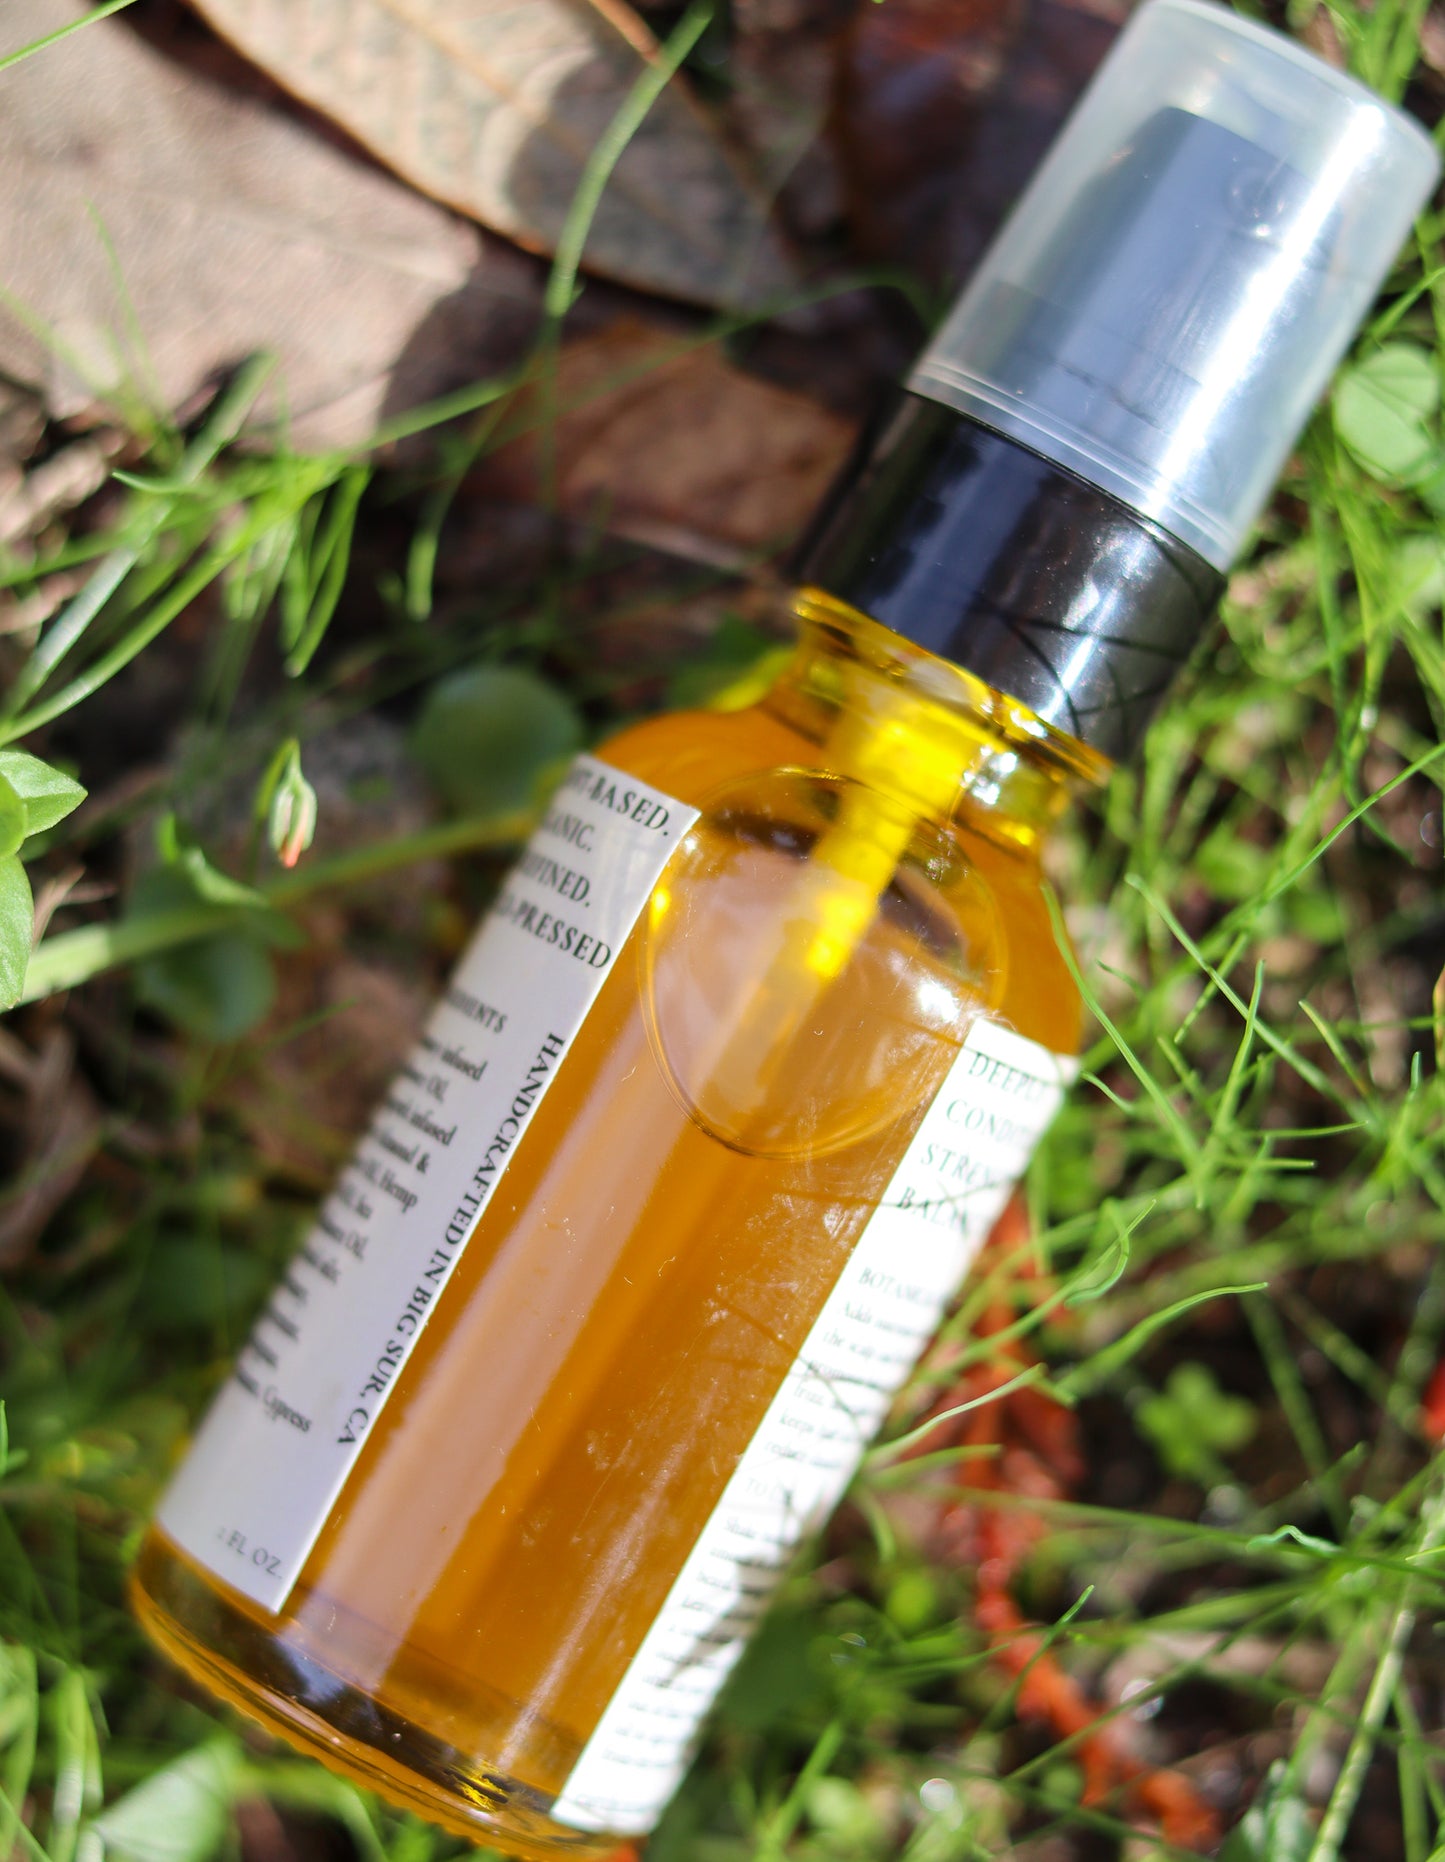 HAIR & BEARD SERUM - Rosemary & Fenugreek Botanical Oils - Scalp Serum -Hair conditioner, growth and dandruff treatment oil